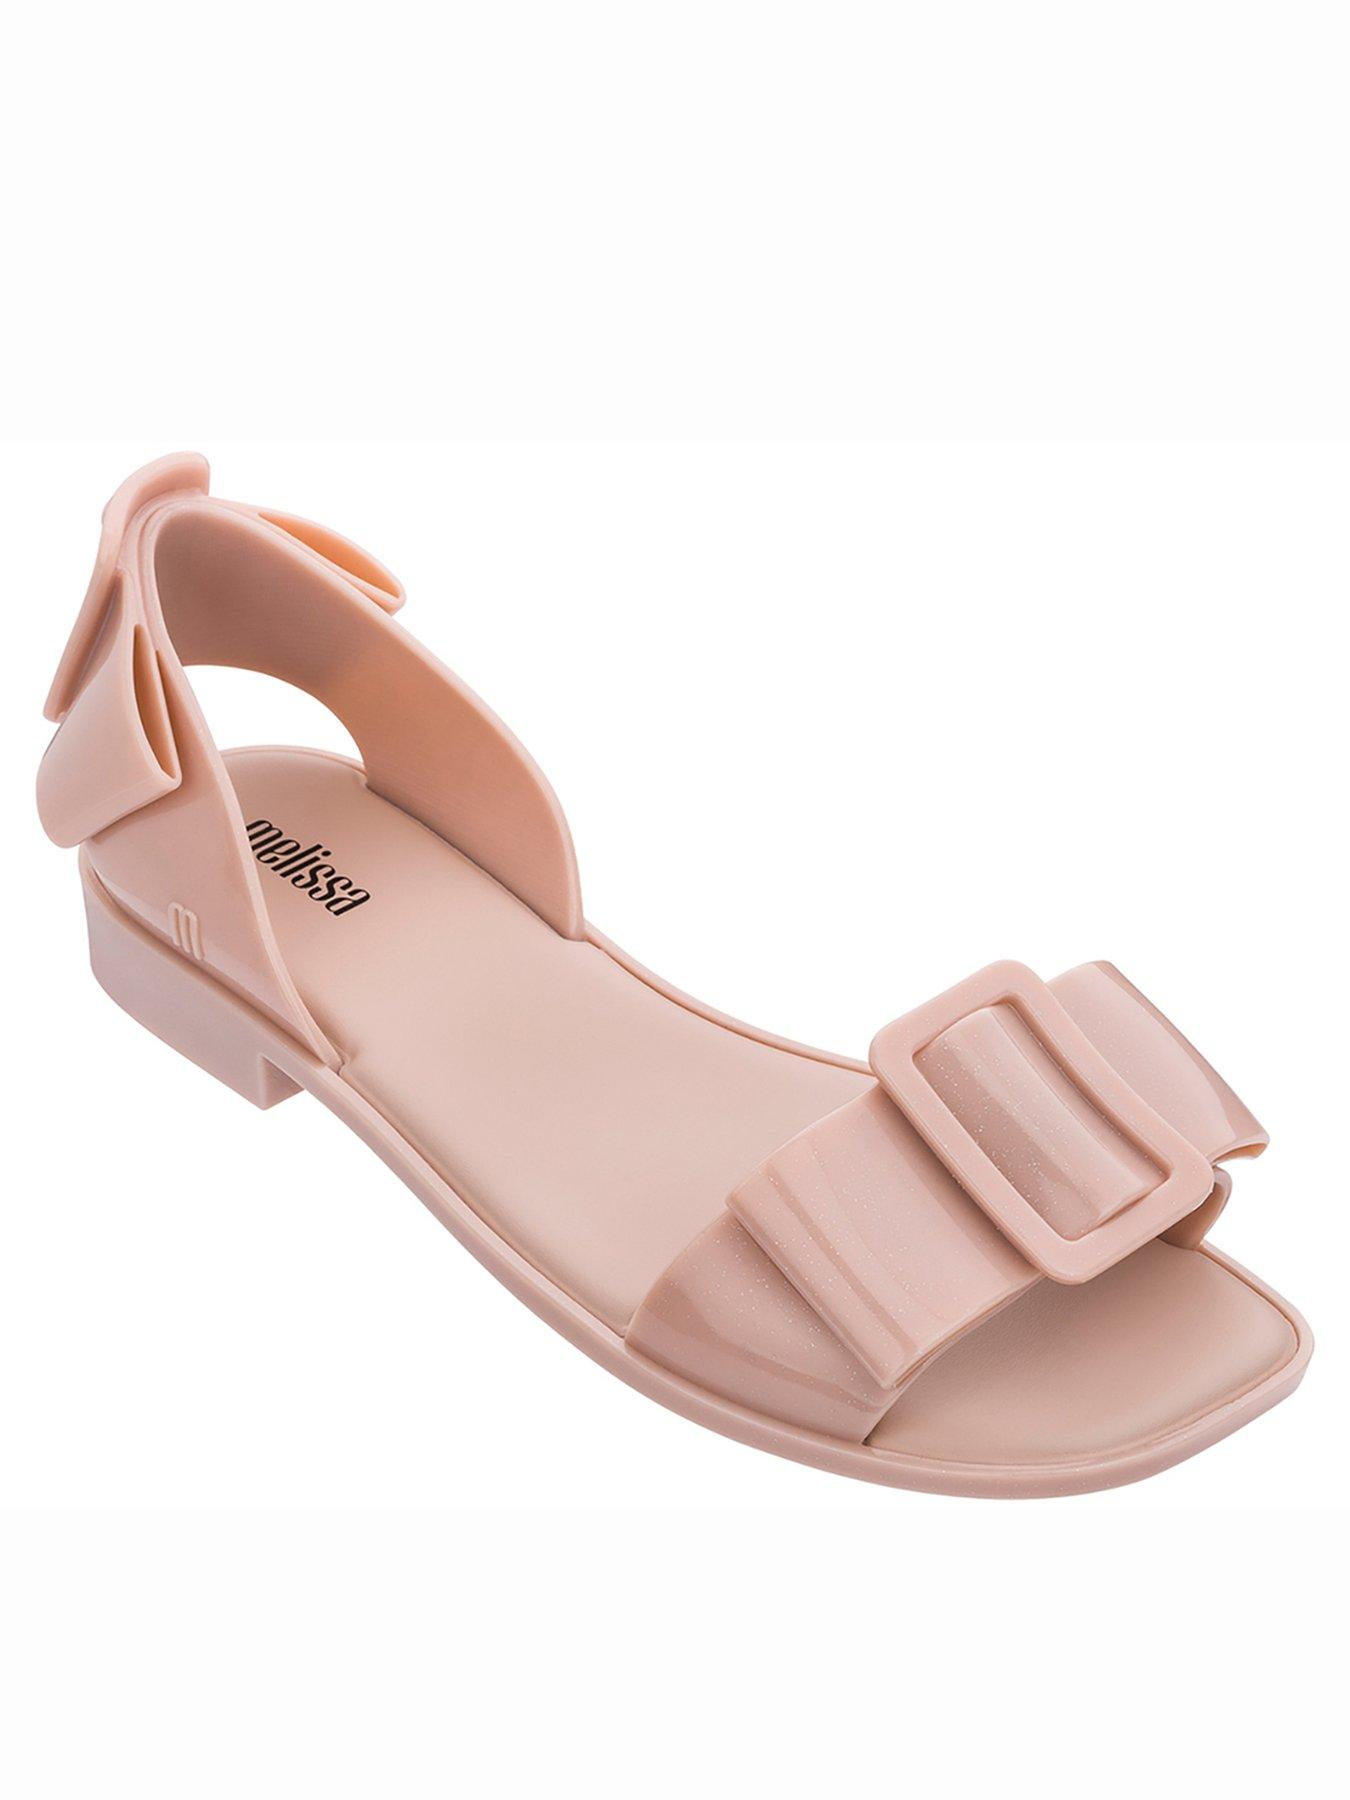 flat pink sandals uk